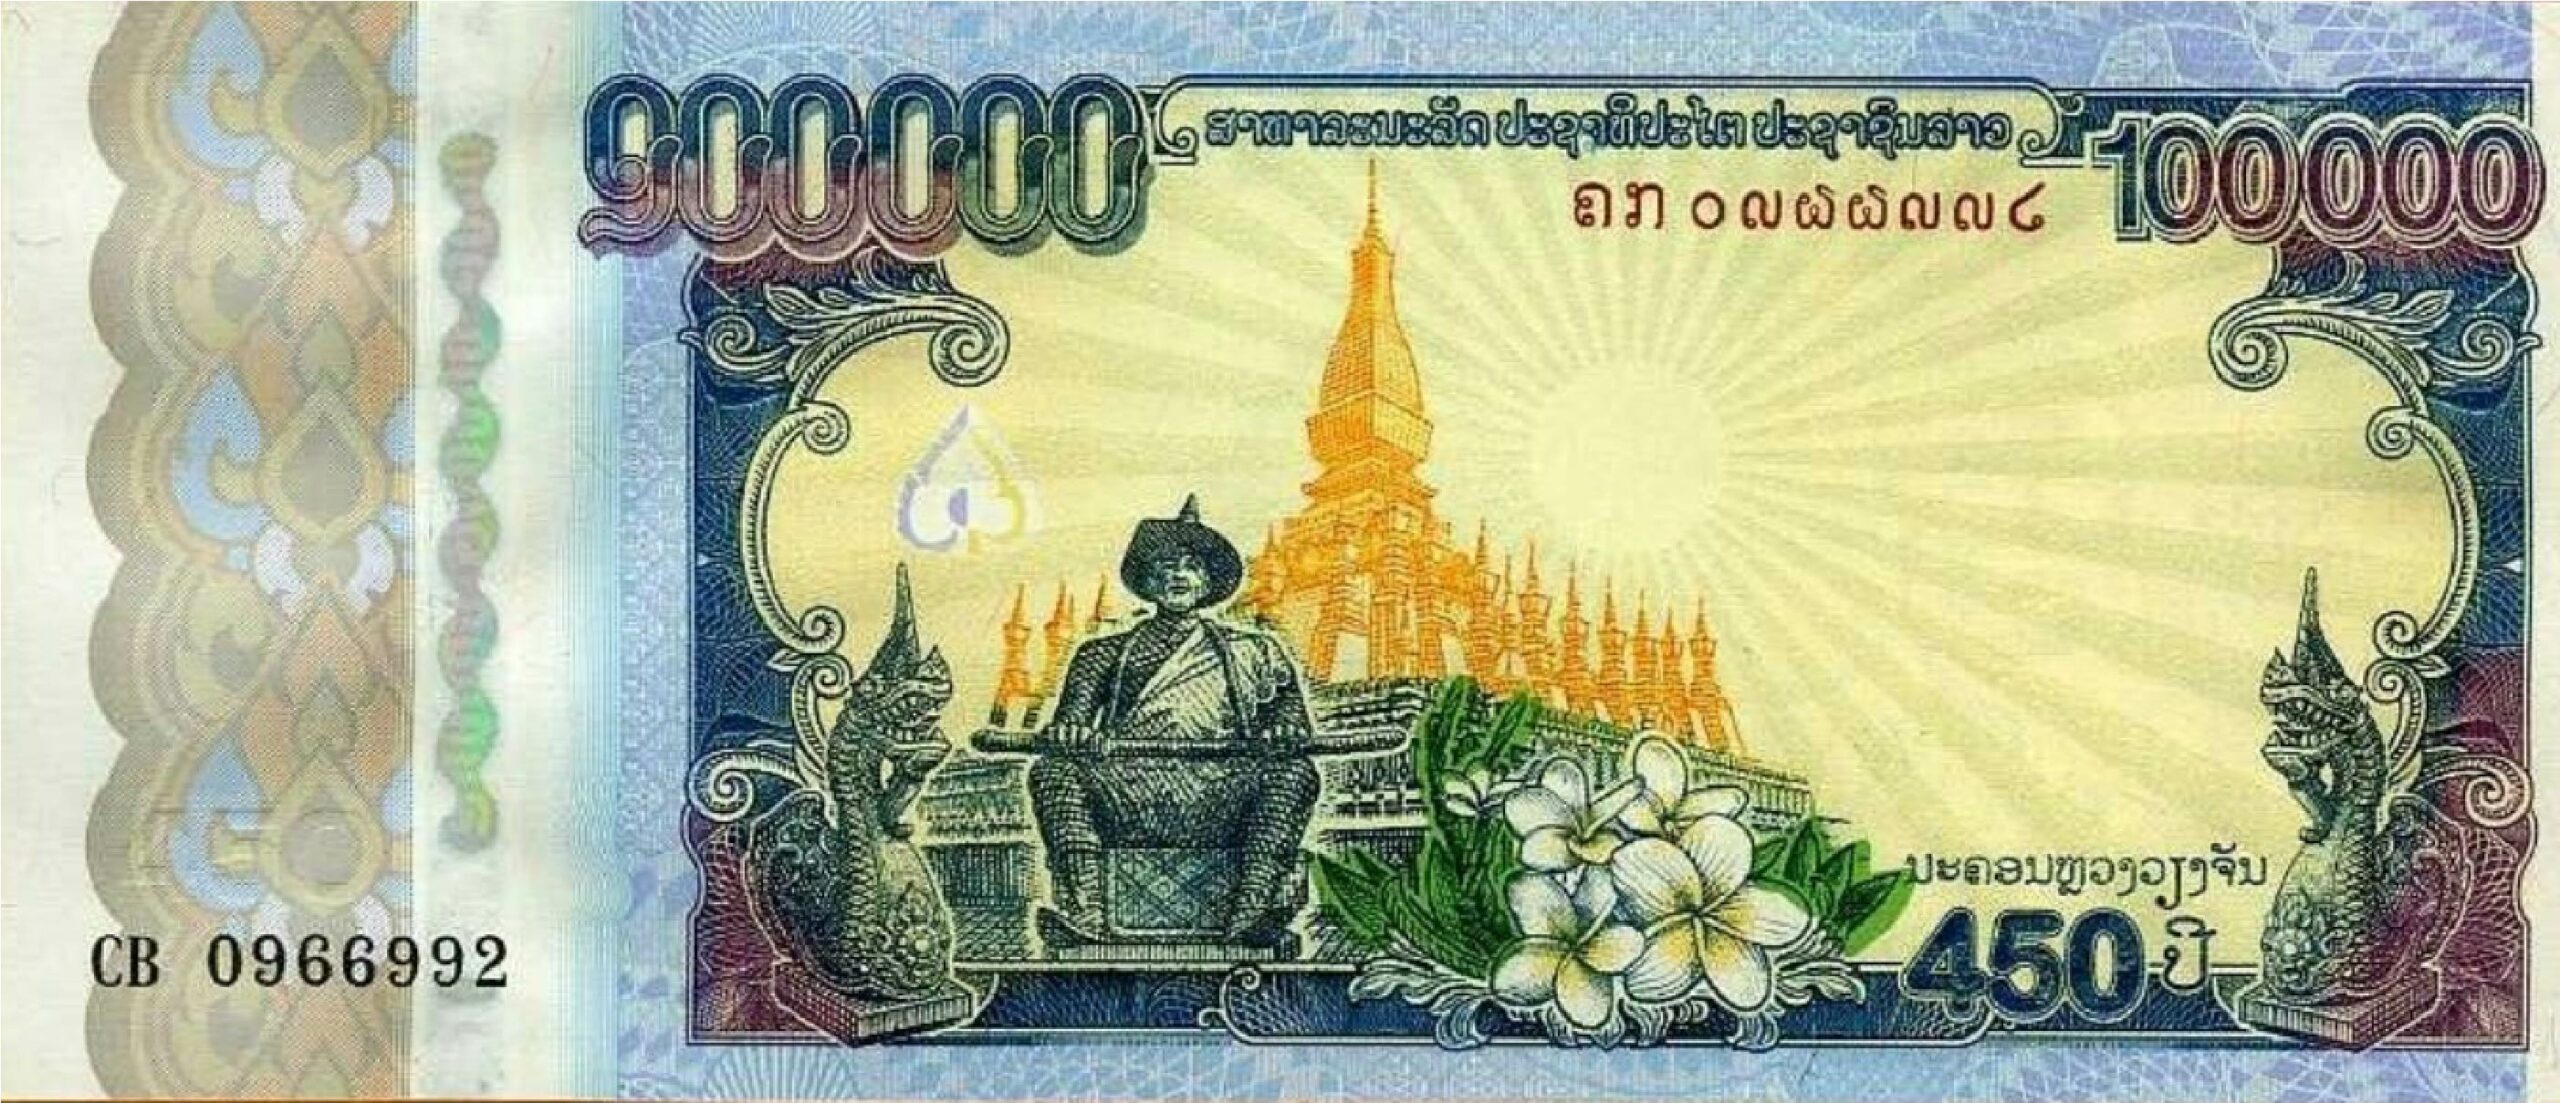 100,000 Lao Kip banknote (commemorative)